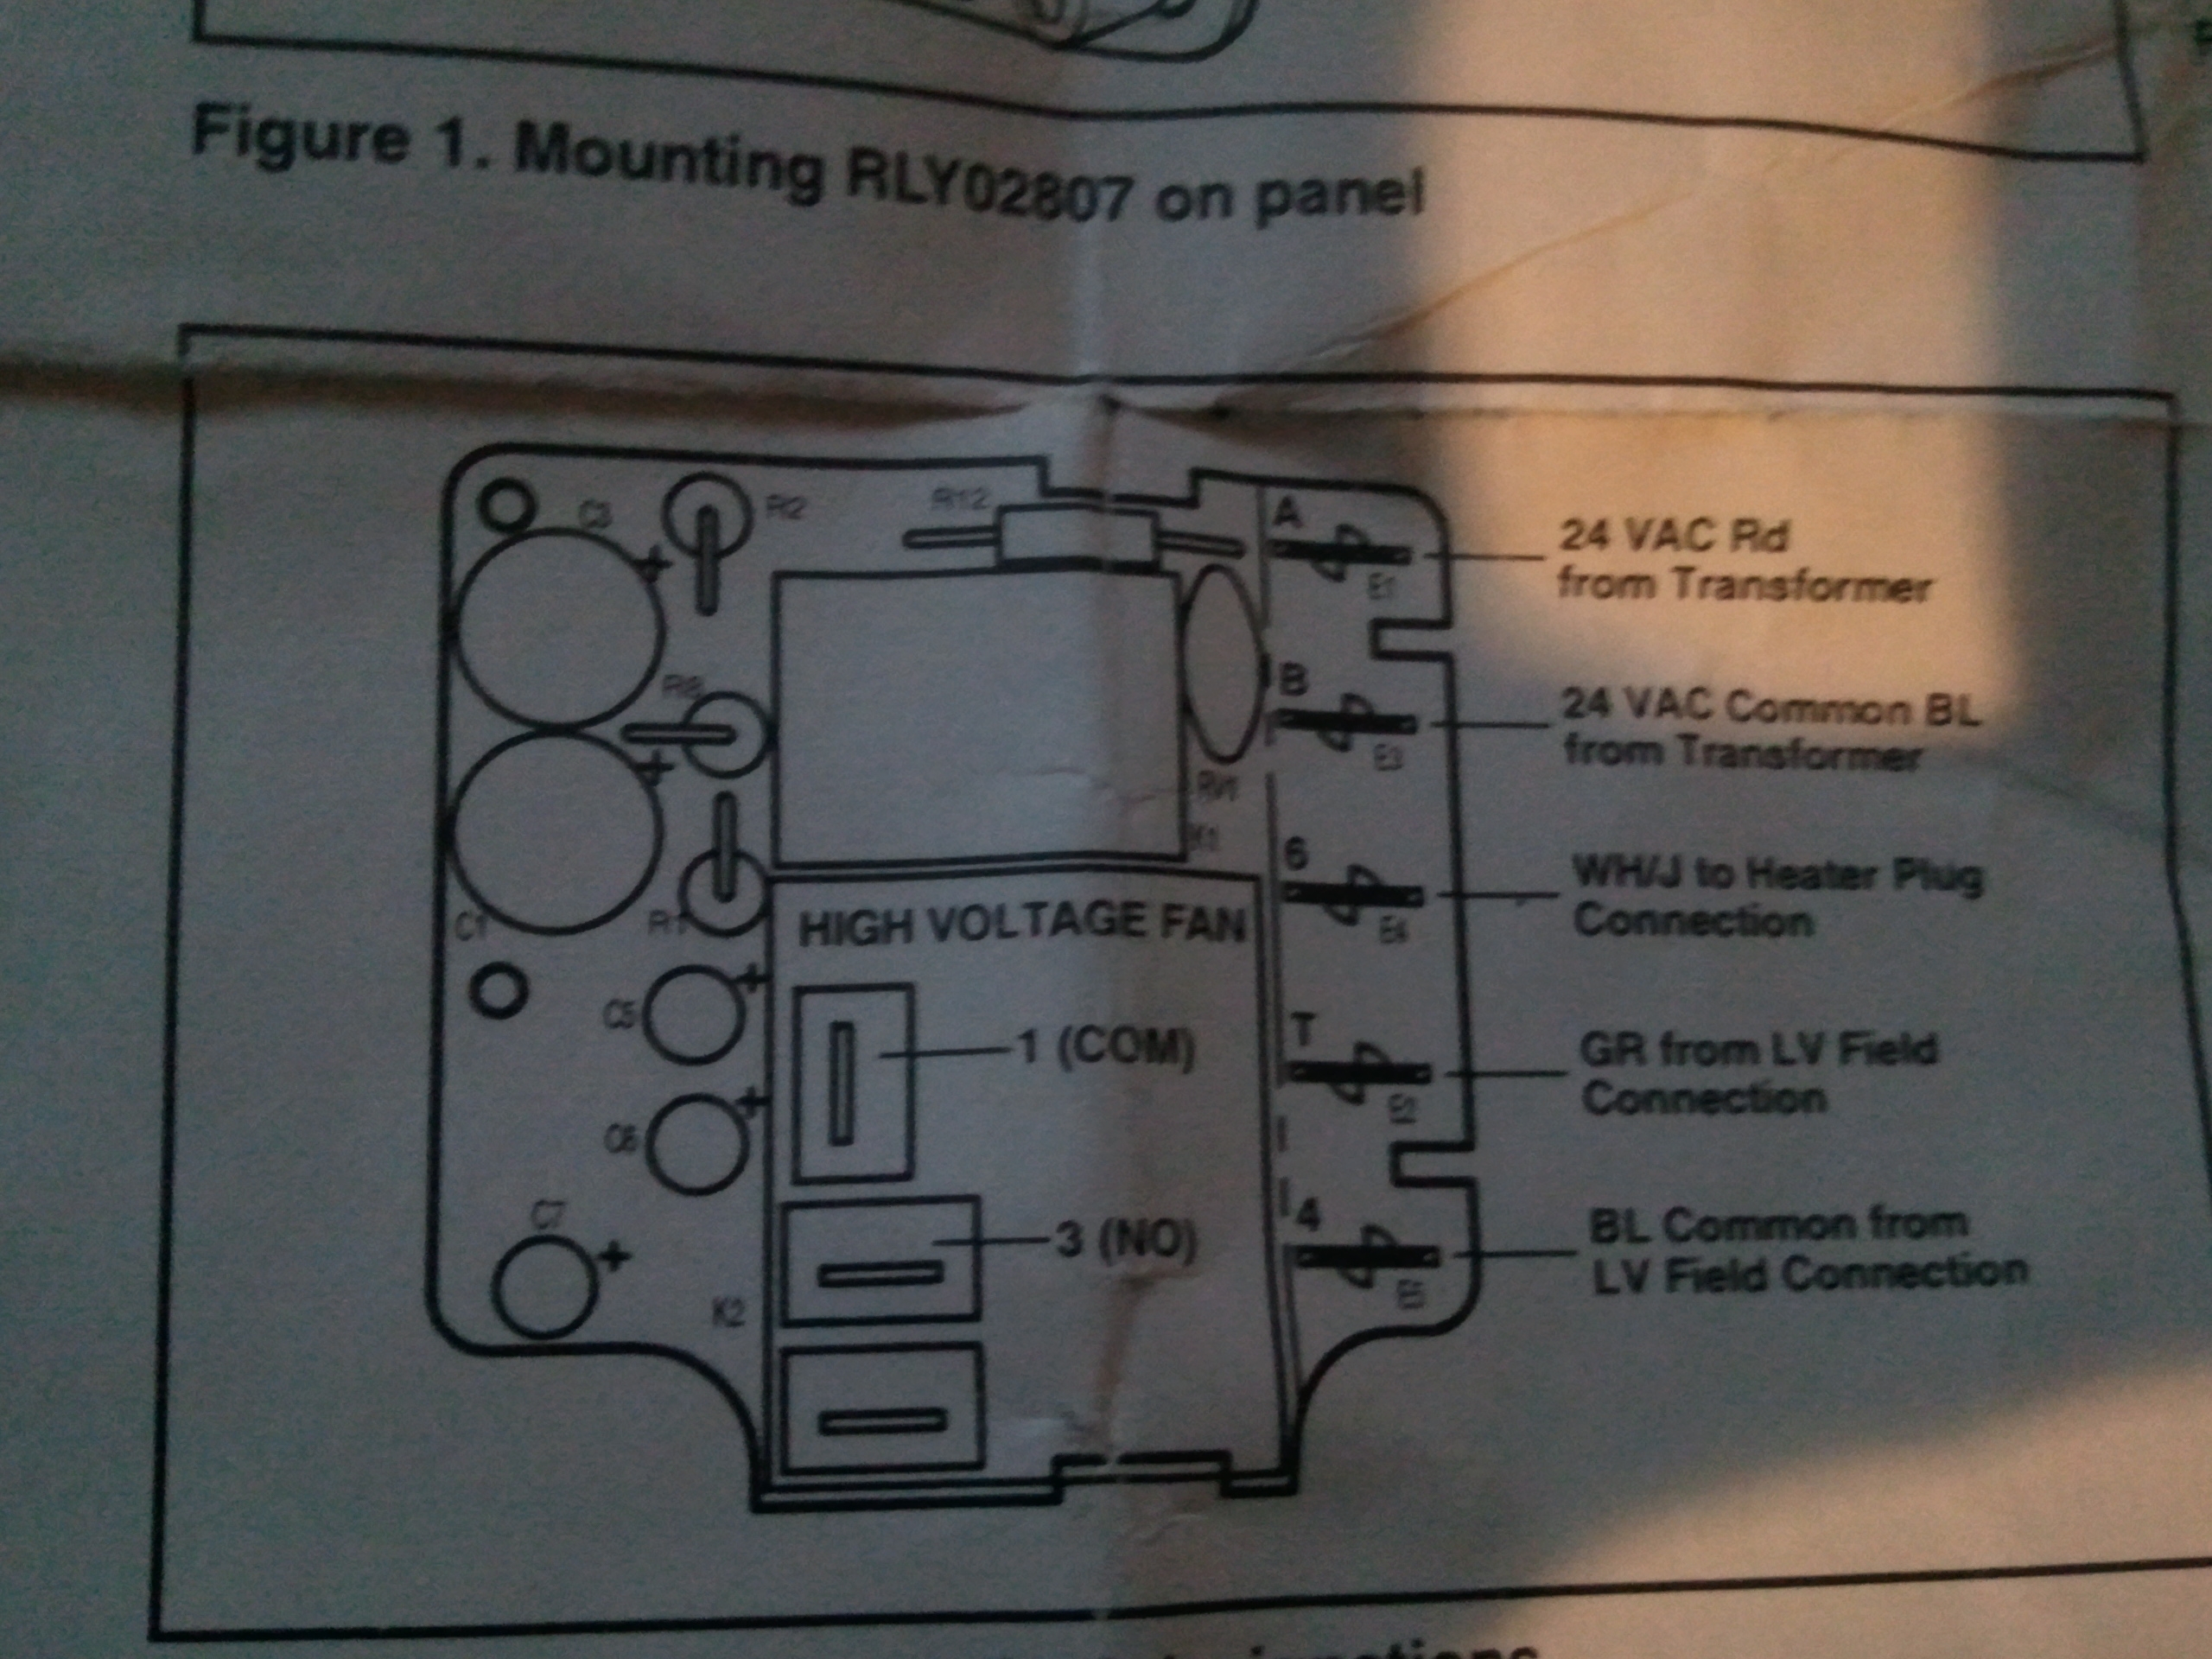 trane xl 1200 wiring diagram